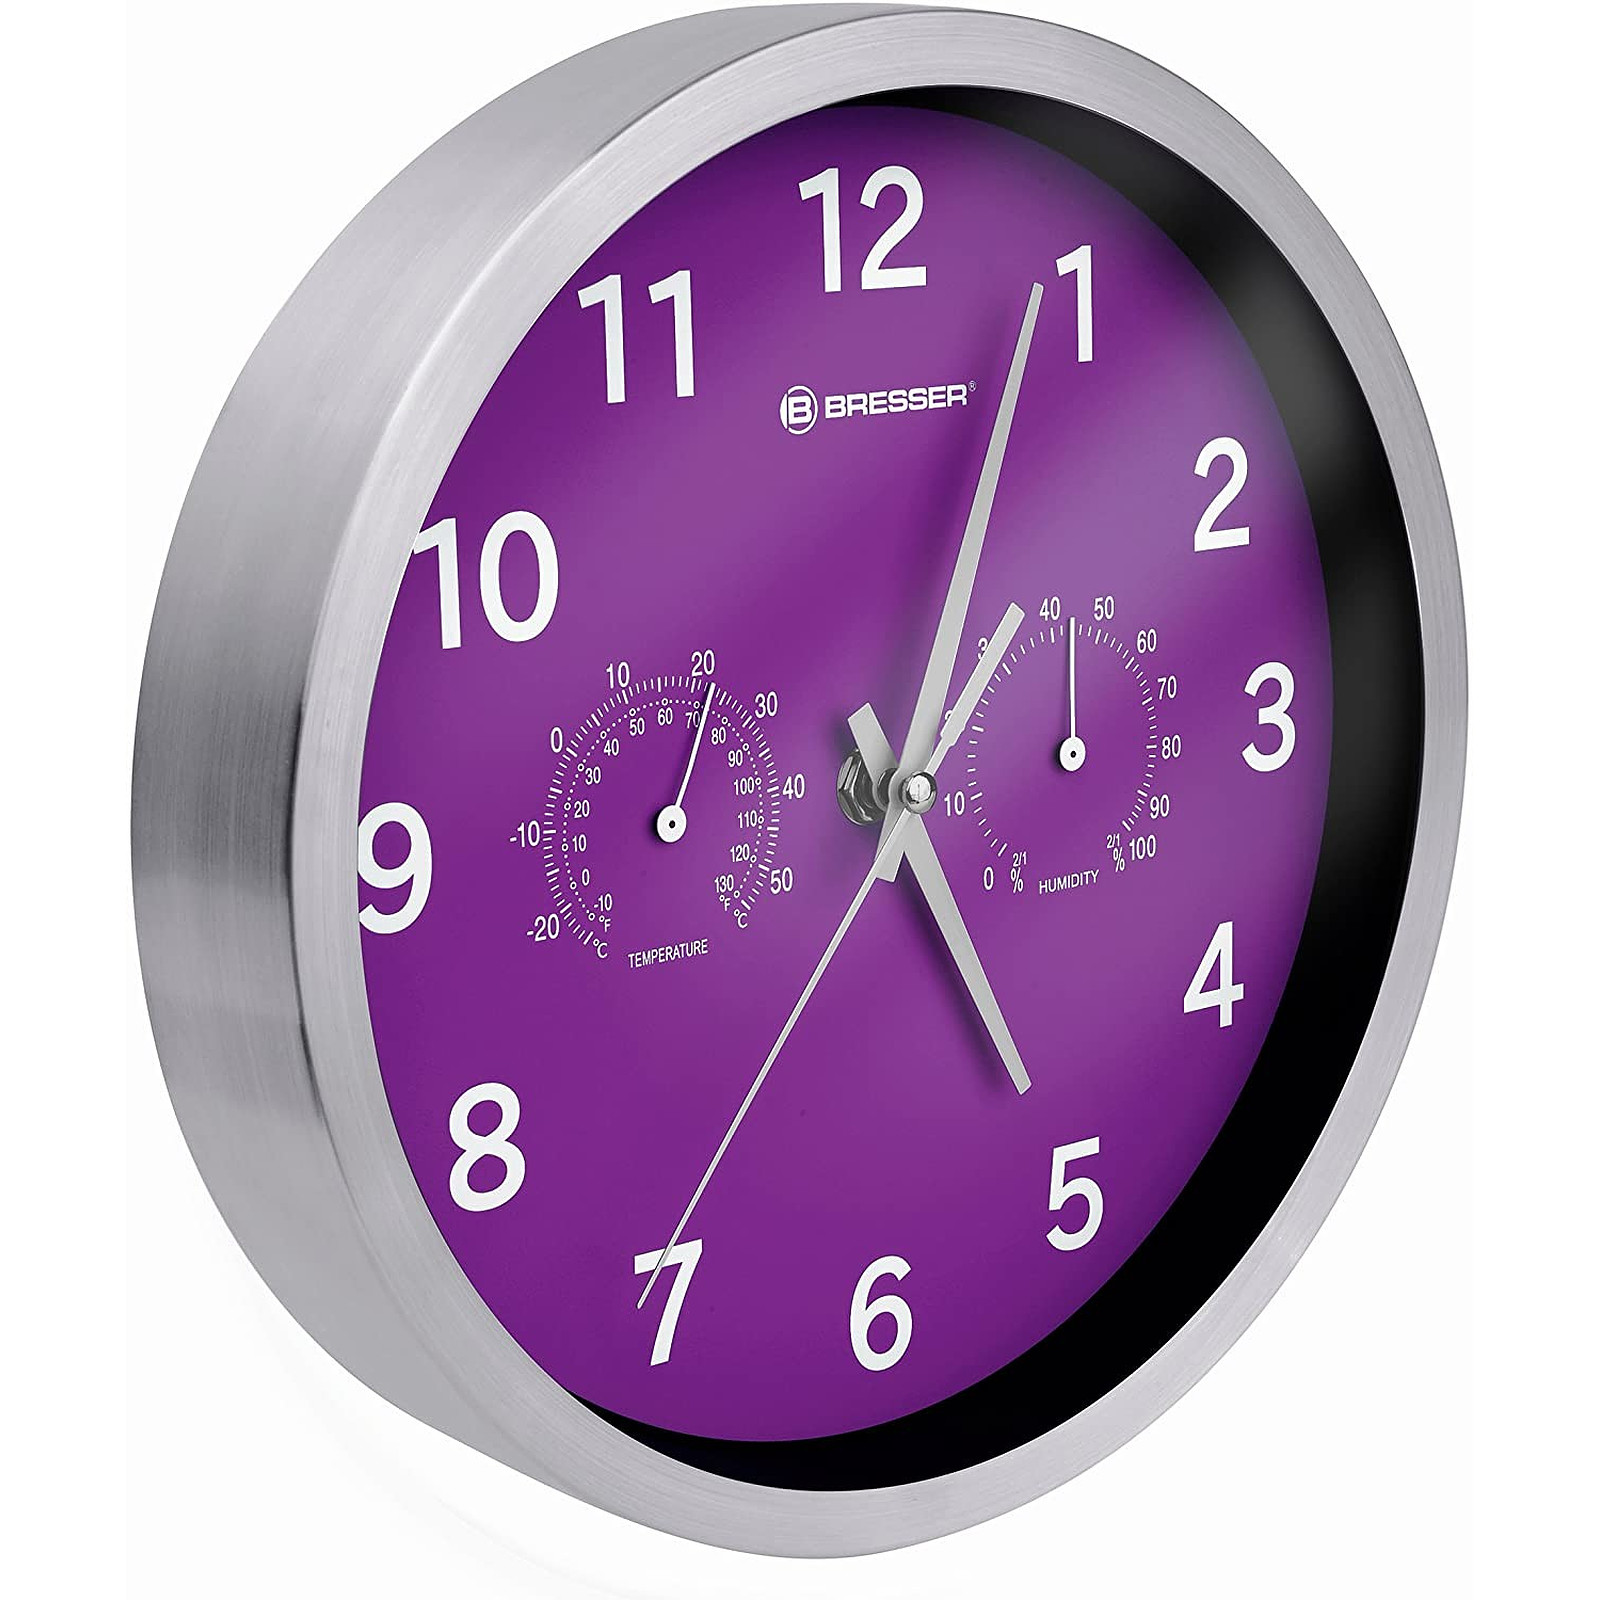 Bresser Horloge Murale 25cm Mytime Avec Temperature Et Humidite Couleur Violette BRE_8020310TJ5000 - Station Meteo Bresser